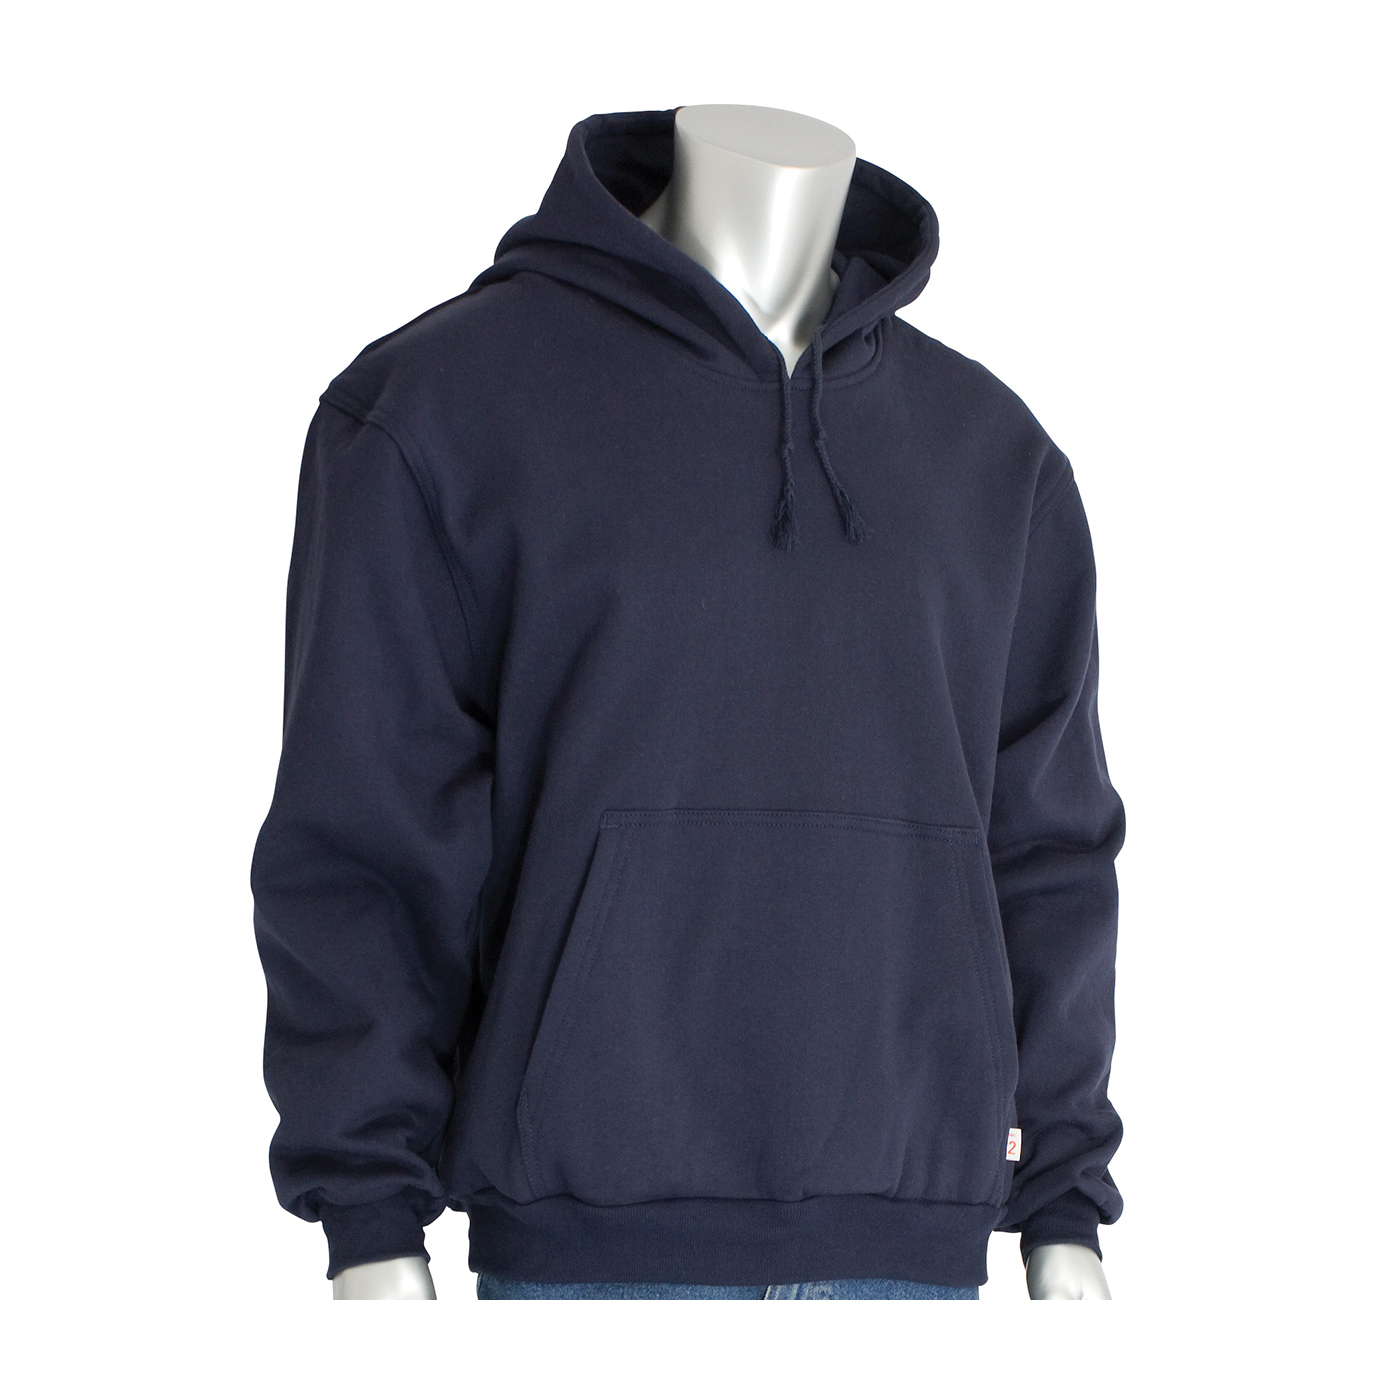 PIP® 385-FRPH-NV/XL Polartec® 385-FRPH Arc and Flame Resistant Sweatshirt, XL, Navy, FR Fleece Knit/100% Cotton, 32 in Regular, 33 in Tall L